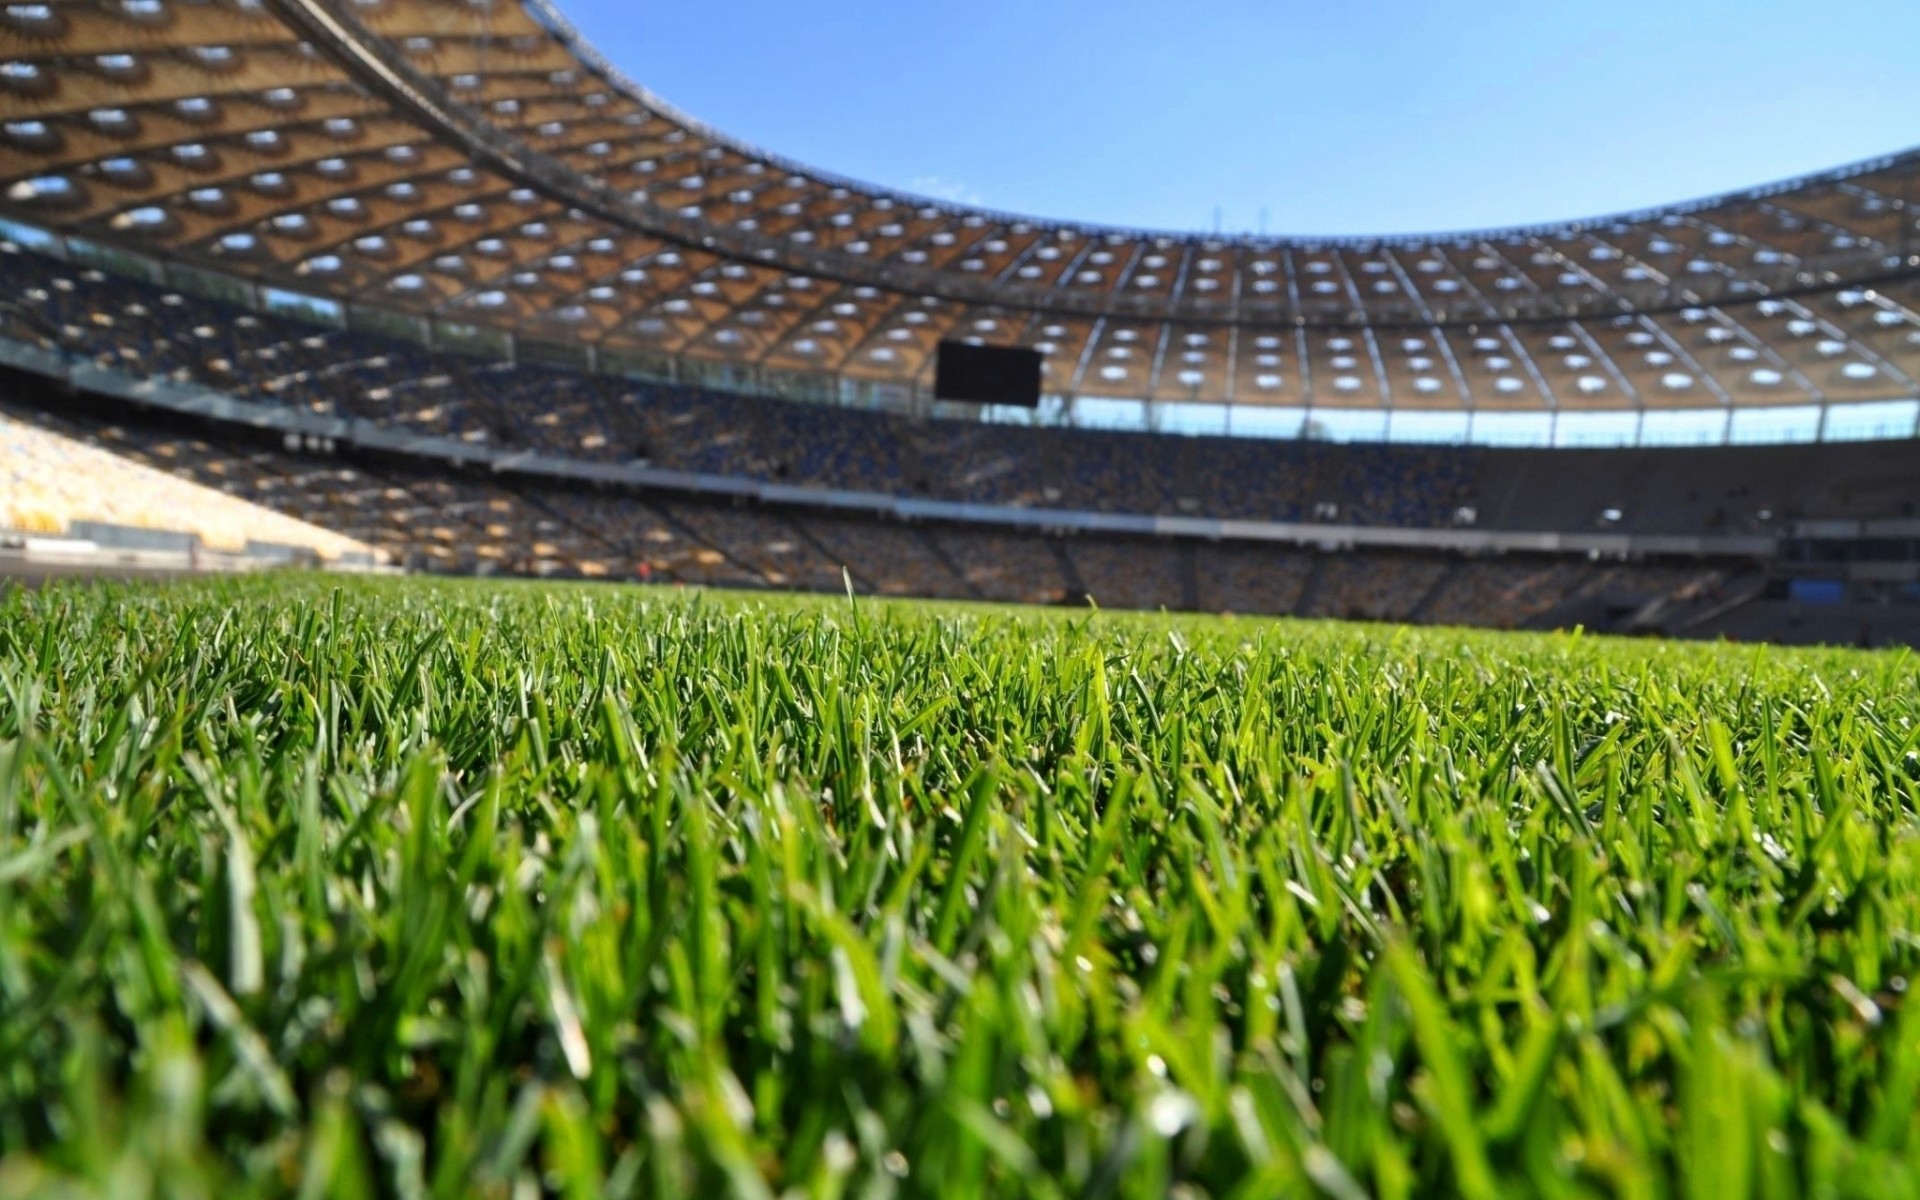 fond d'écran de terrain de football,stade,herbe,pelouse,stade spécifique au football,gazon artificiel